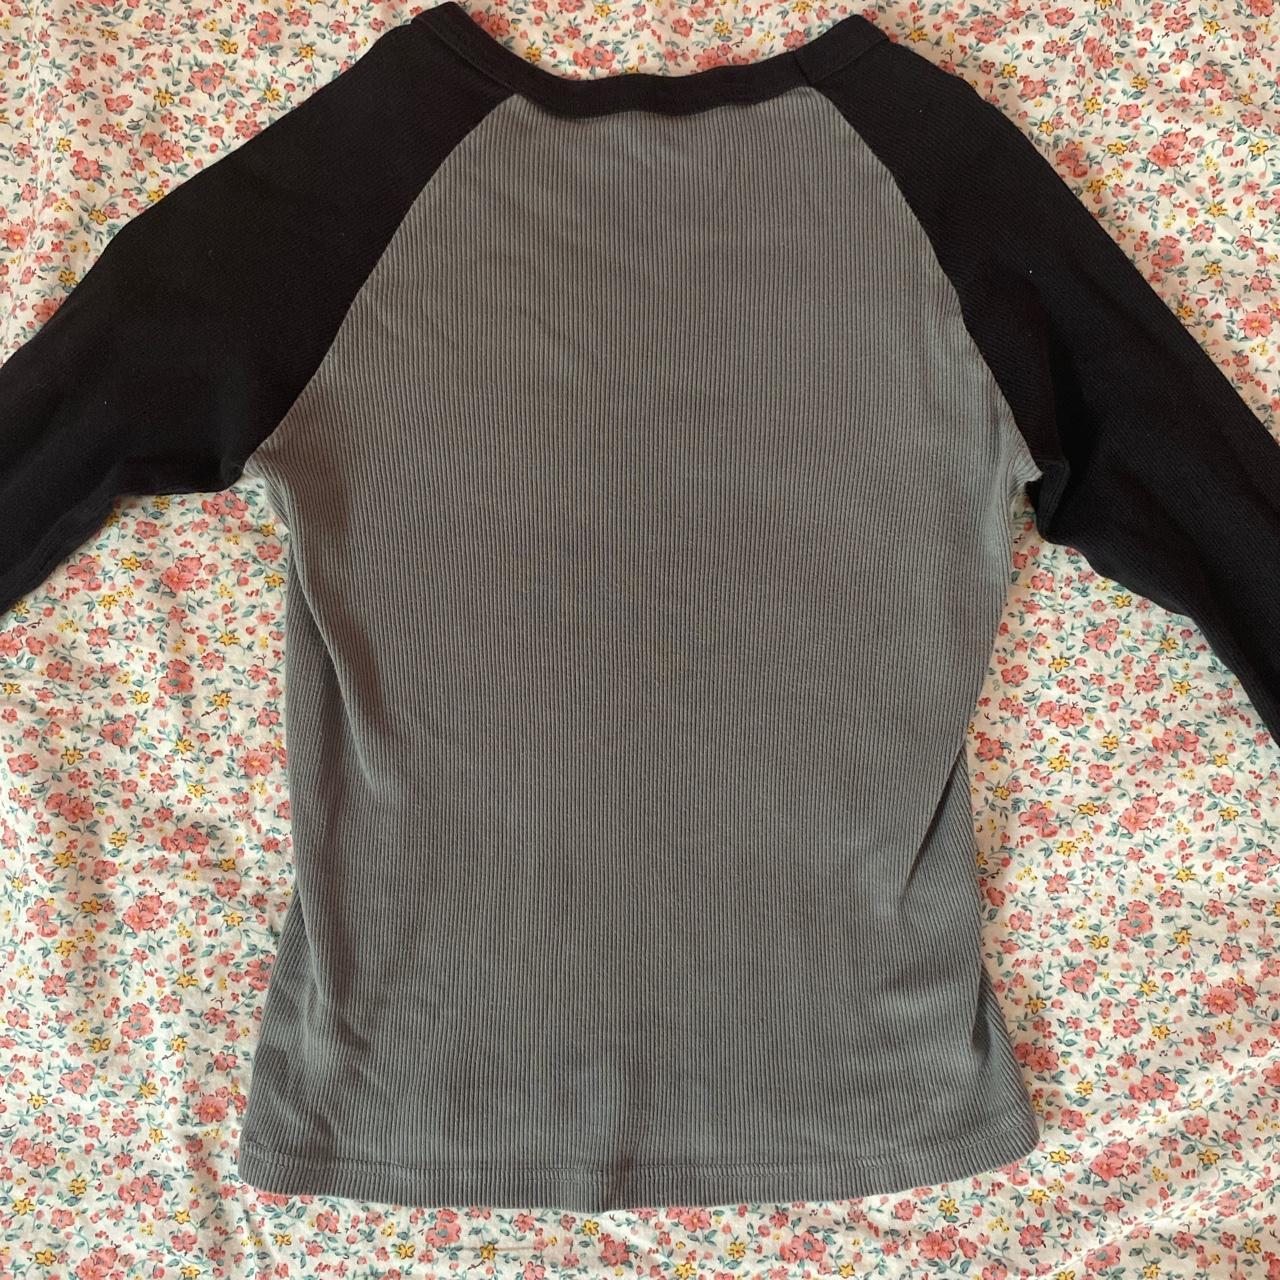 Brandy Melville Women's Black and Grey Shirt (2)